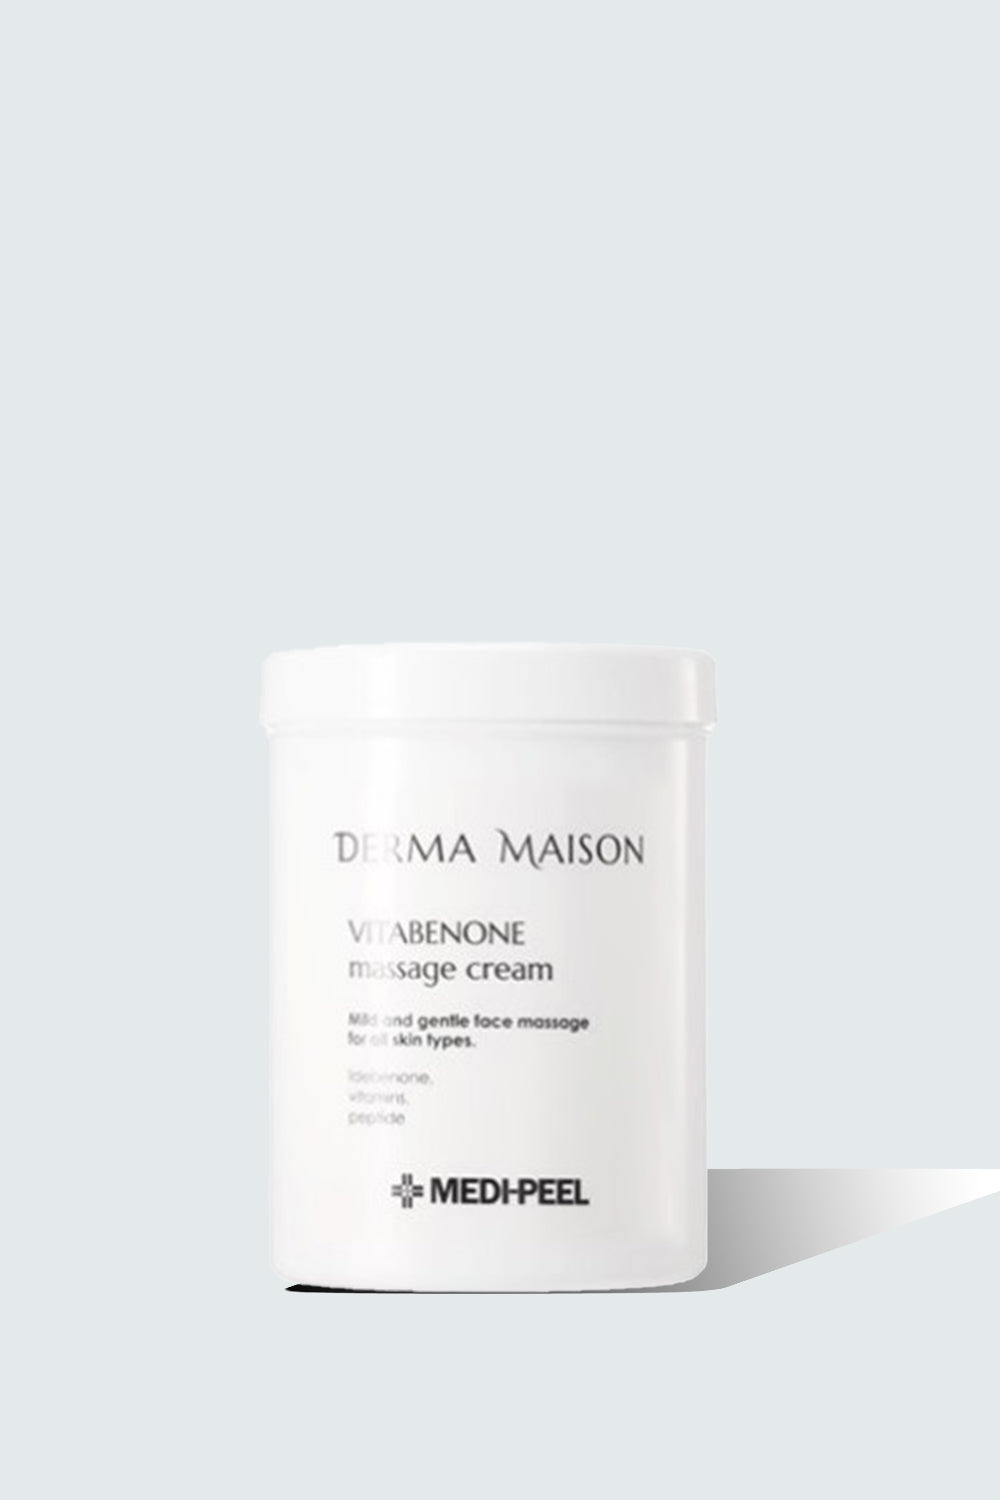 Vitabenone Massage Cream - 1,000ml DERMA MAISON